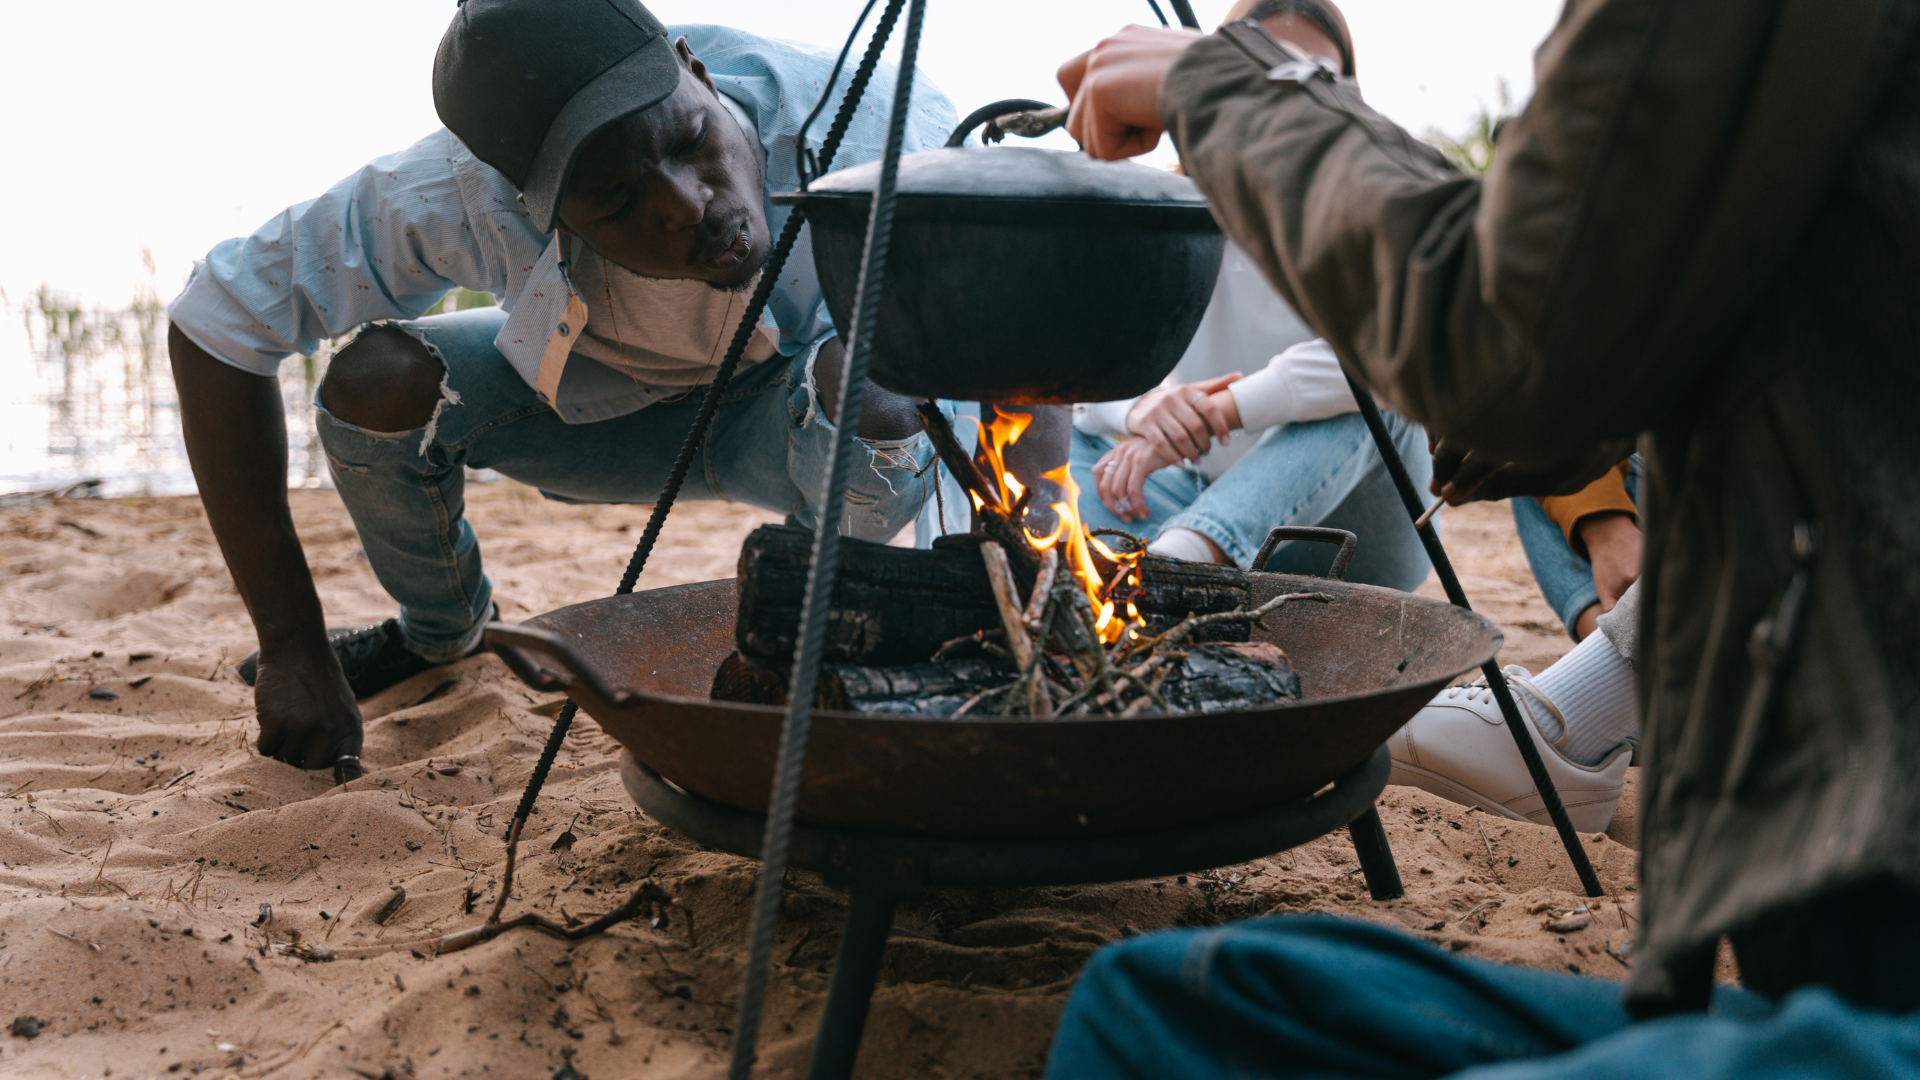 Diliboz Campfire Tripod for Dutch Oven - Camping Tripod for Cooking - Campfire Cooking Stand - Cooking Tripod - Open Fire Tripod Grill for Cooking in